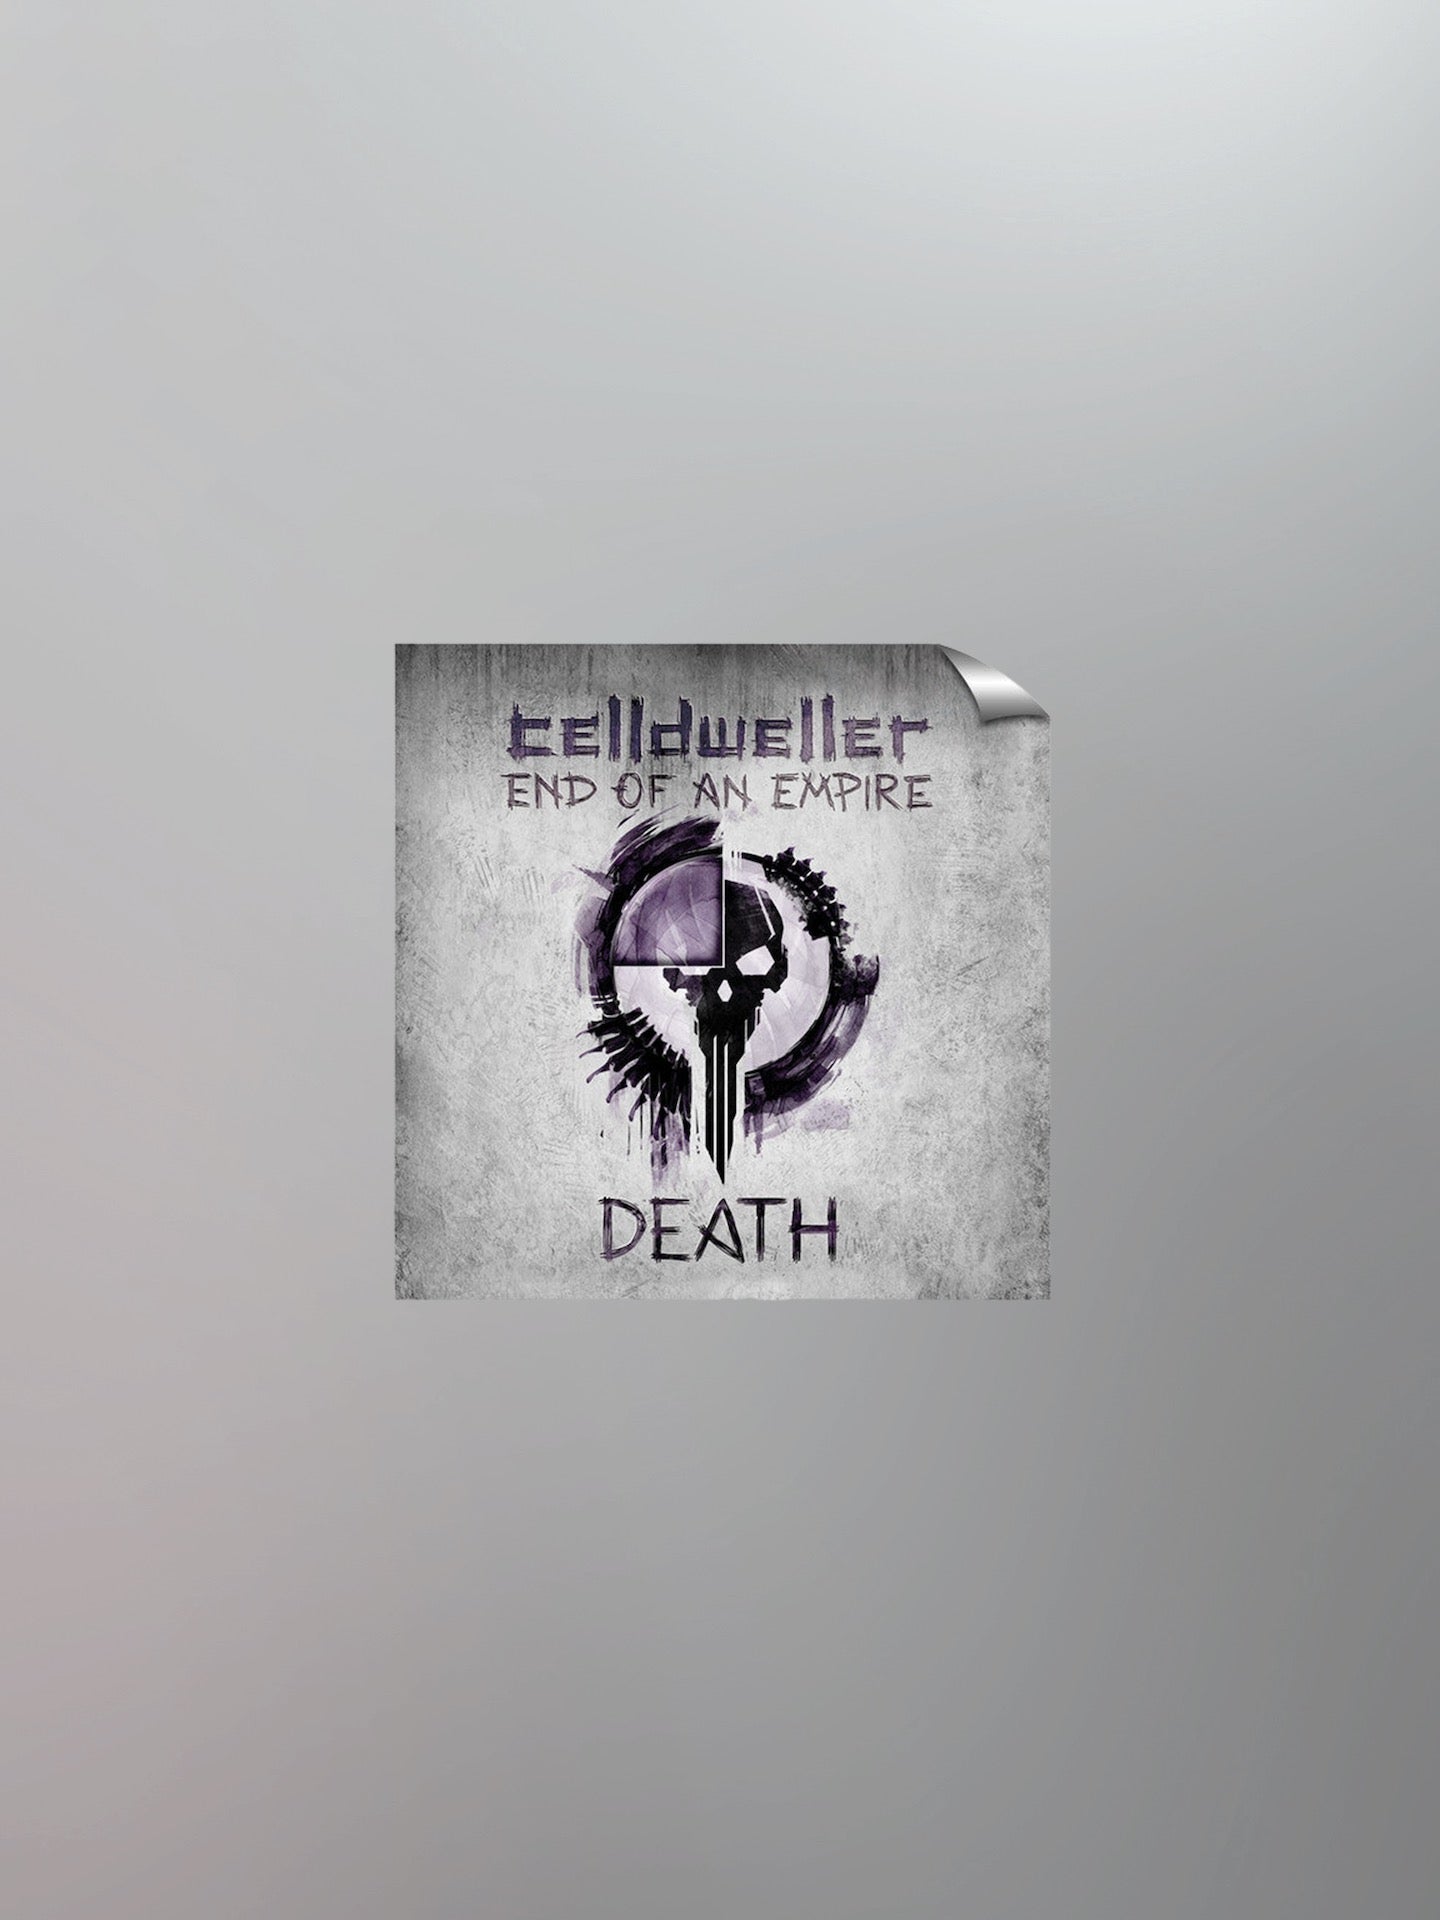 Celldweller - Death 5x5" Sticker